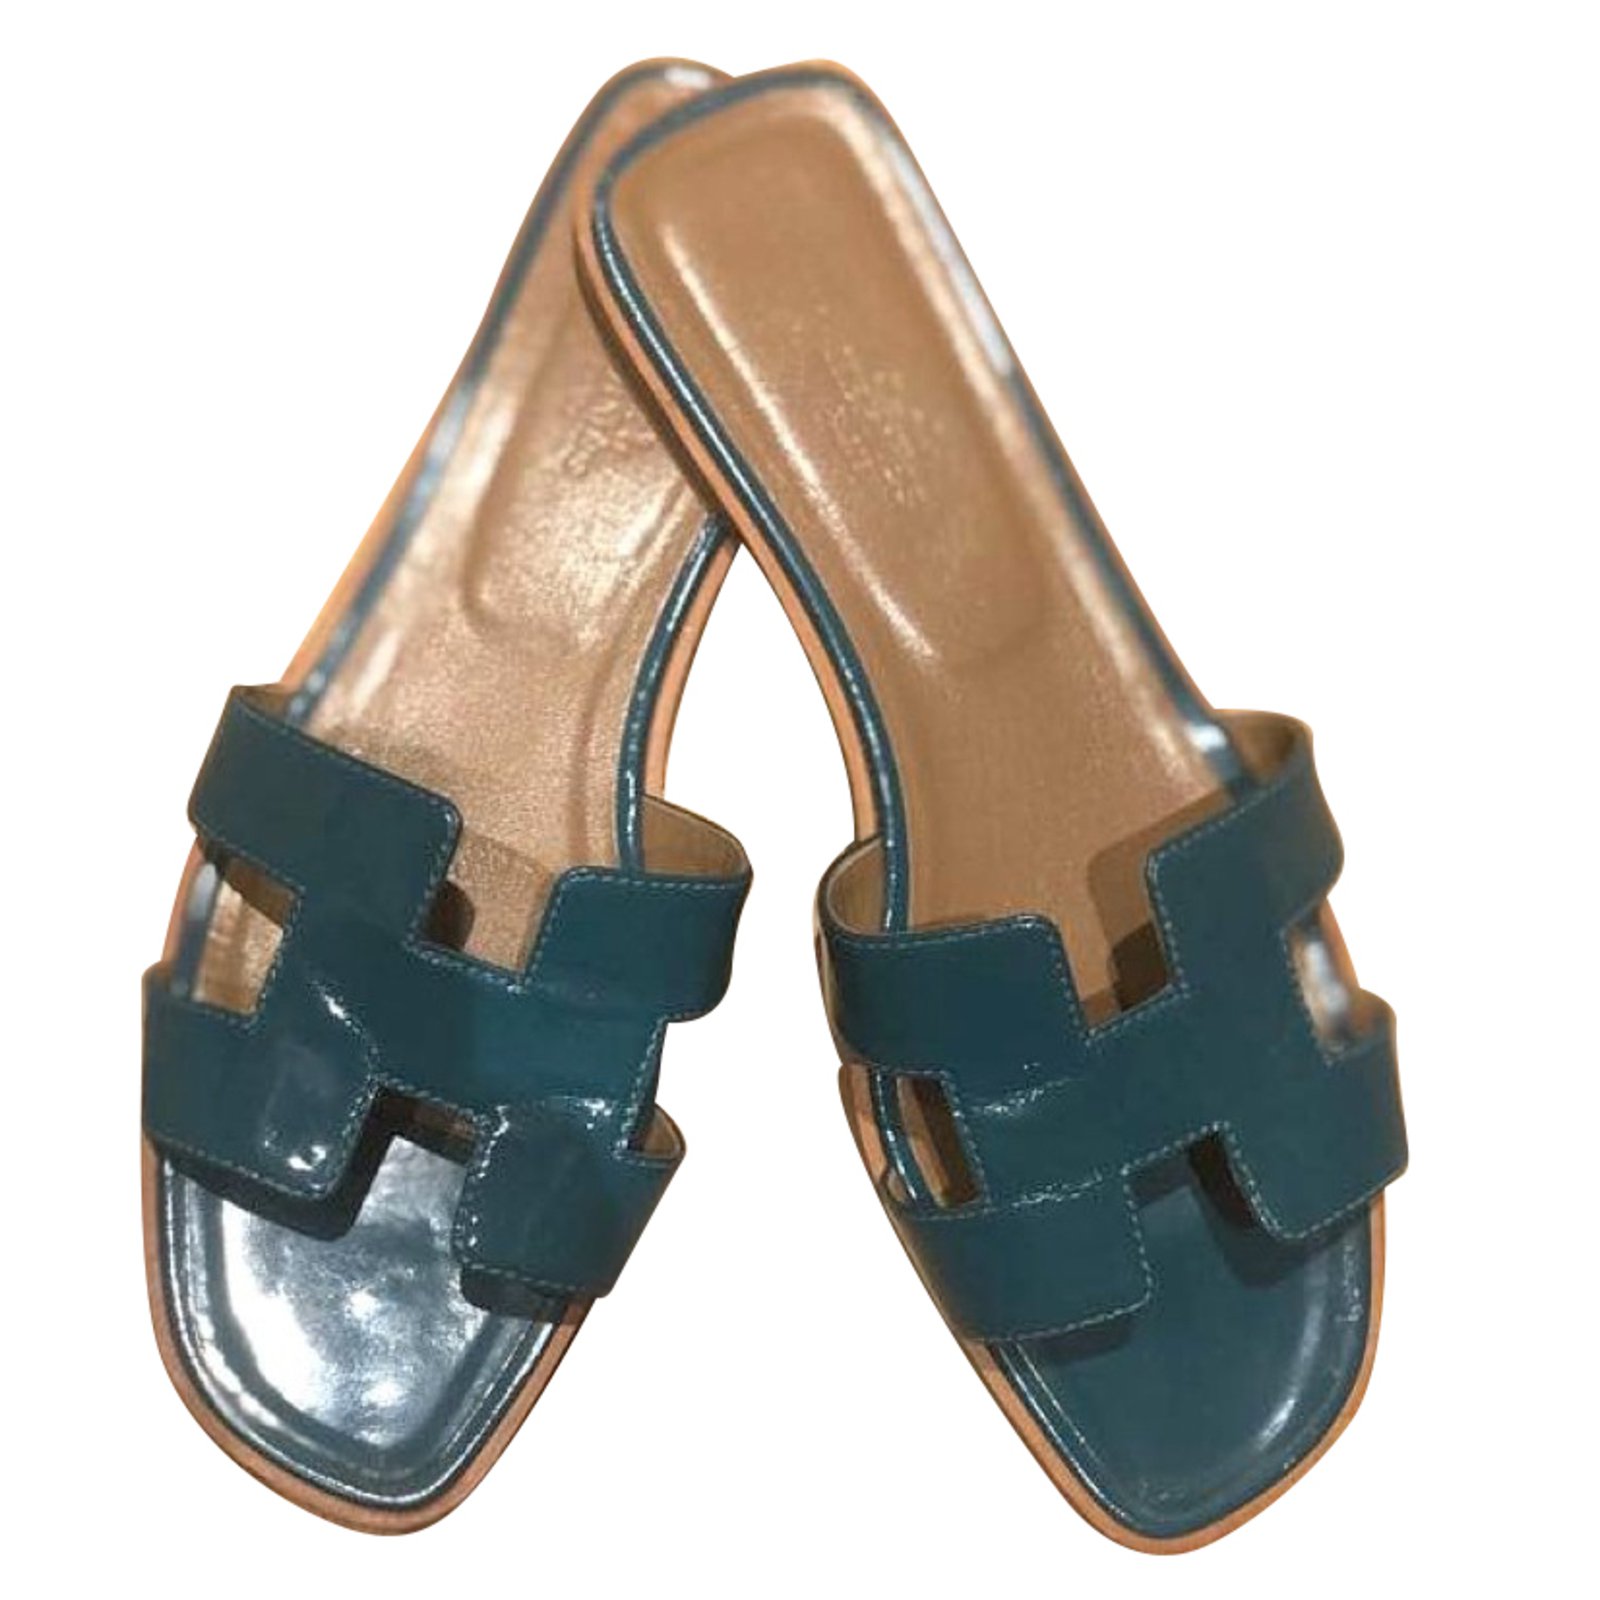 Oran sandals Sandals Patent leather 